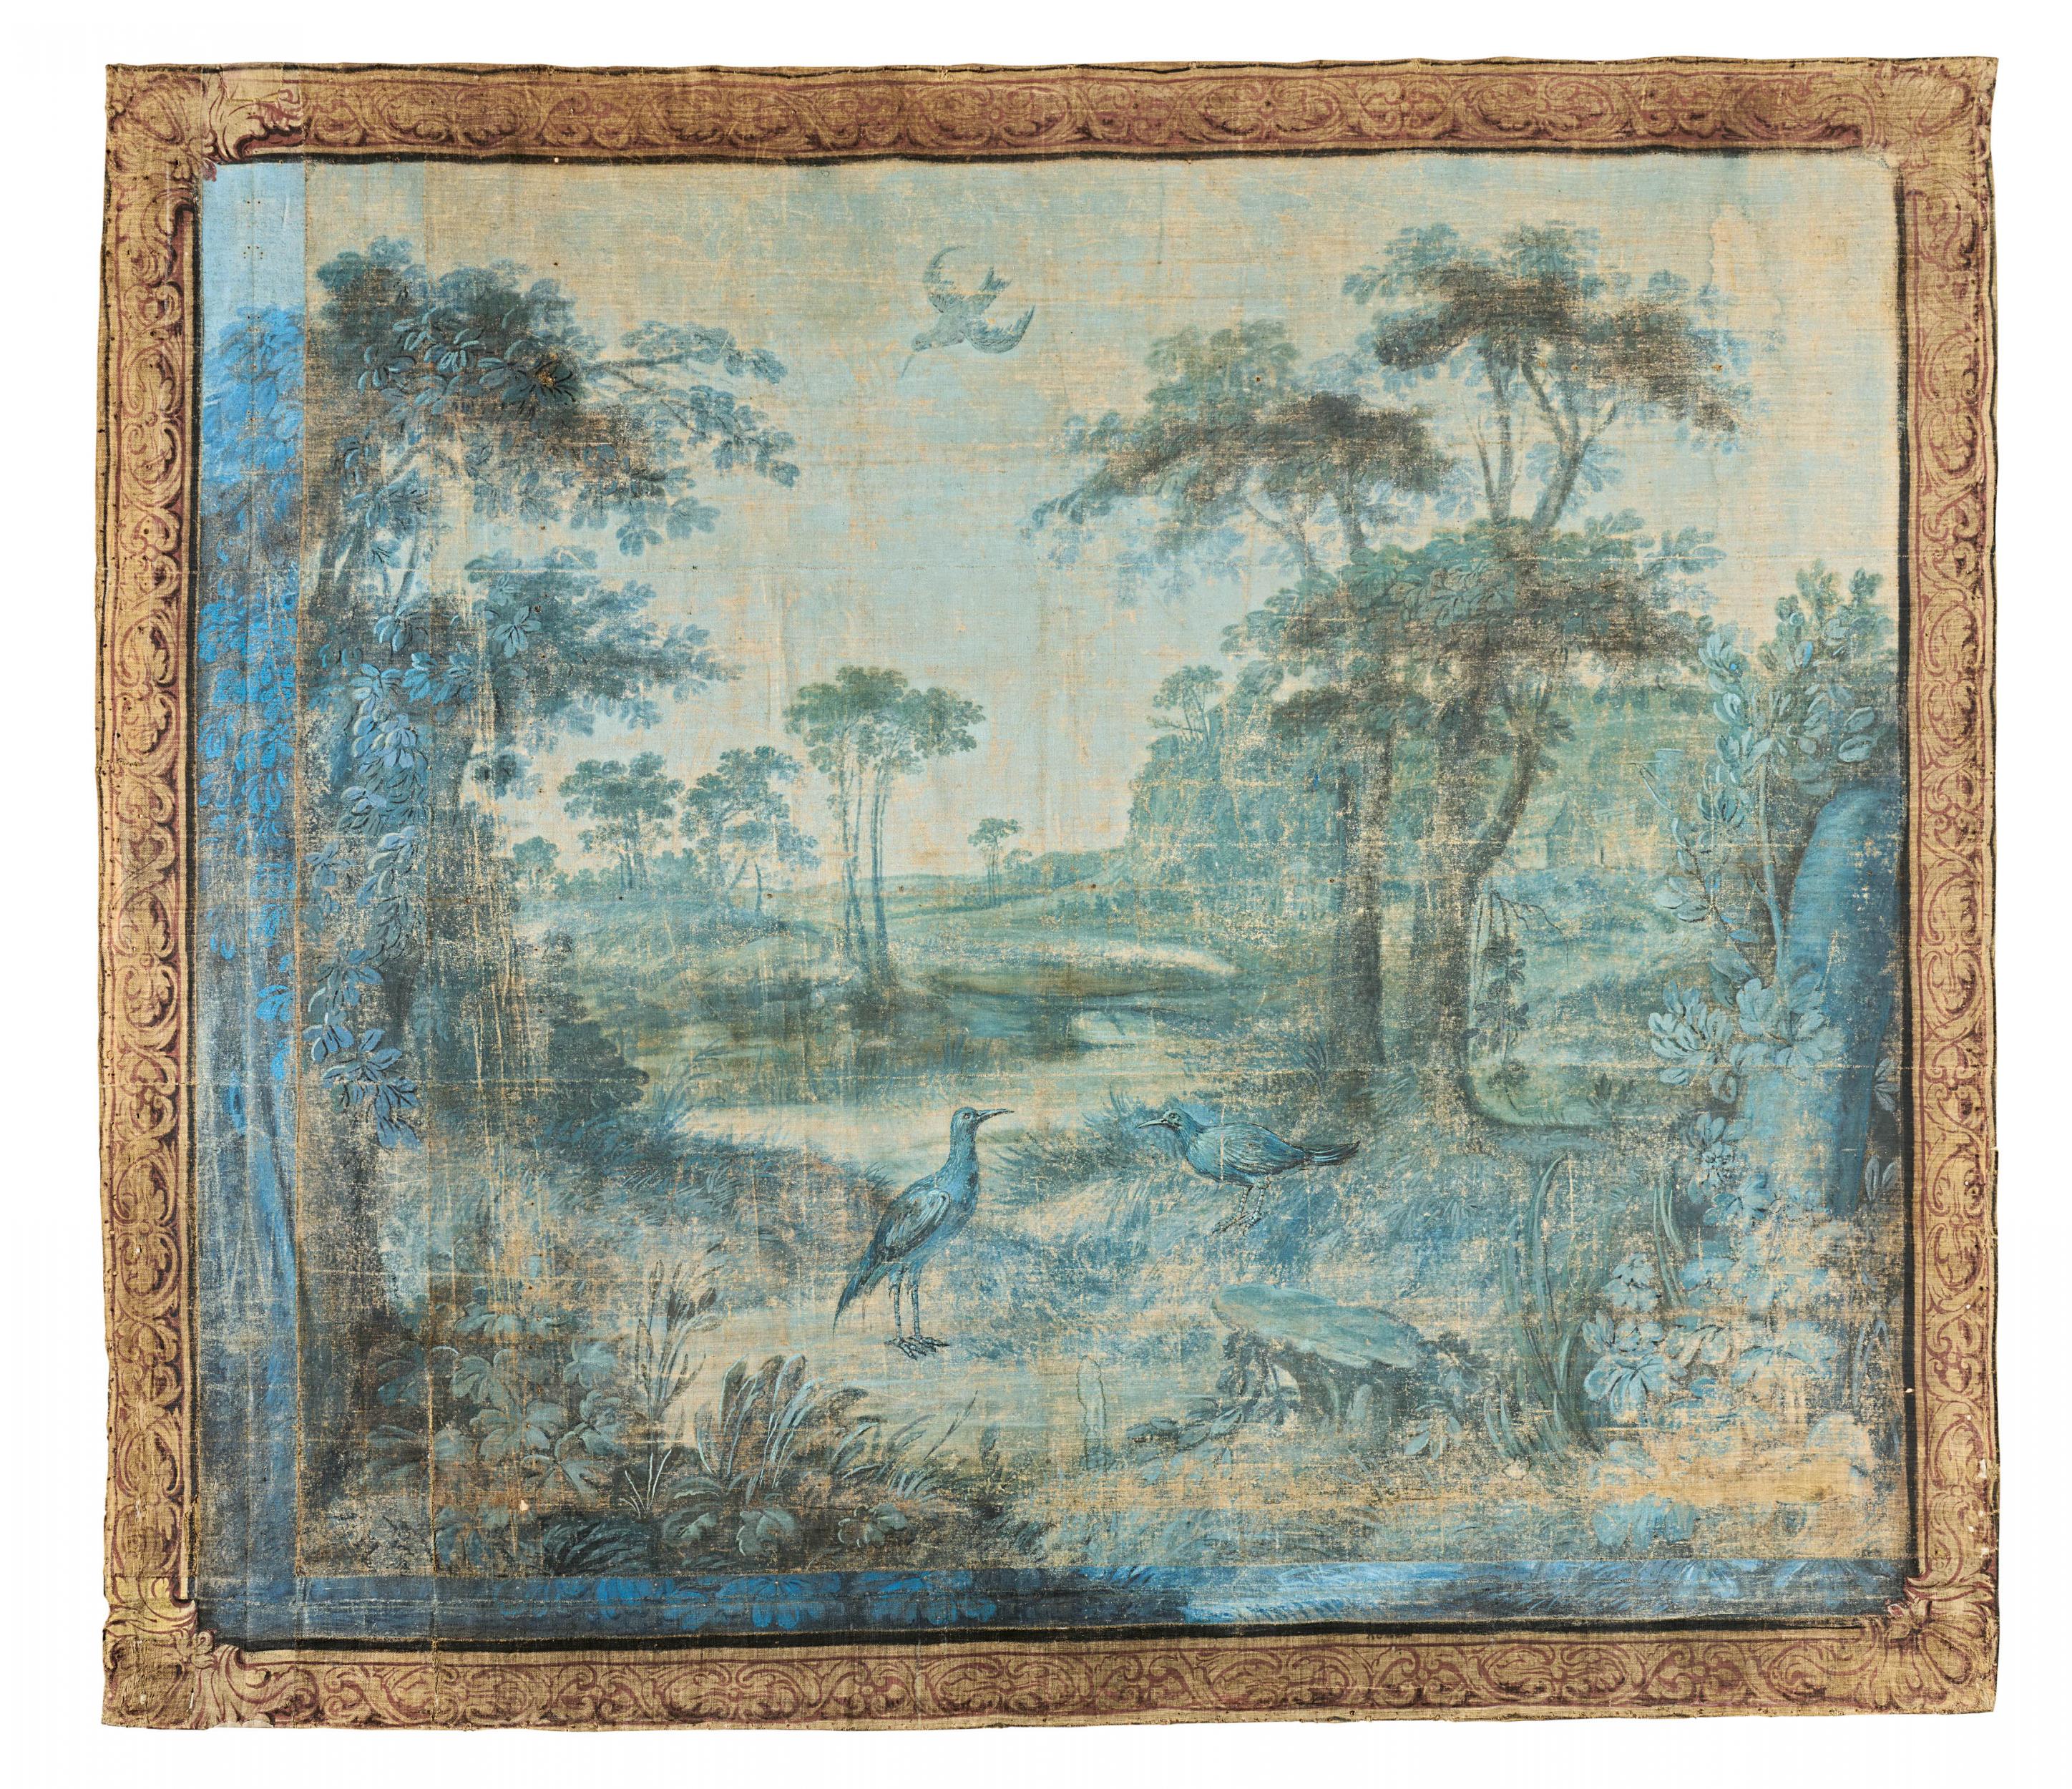 Set of three verdure tapestries with landscape vedutas - Image 4 of 6